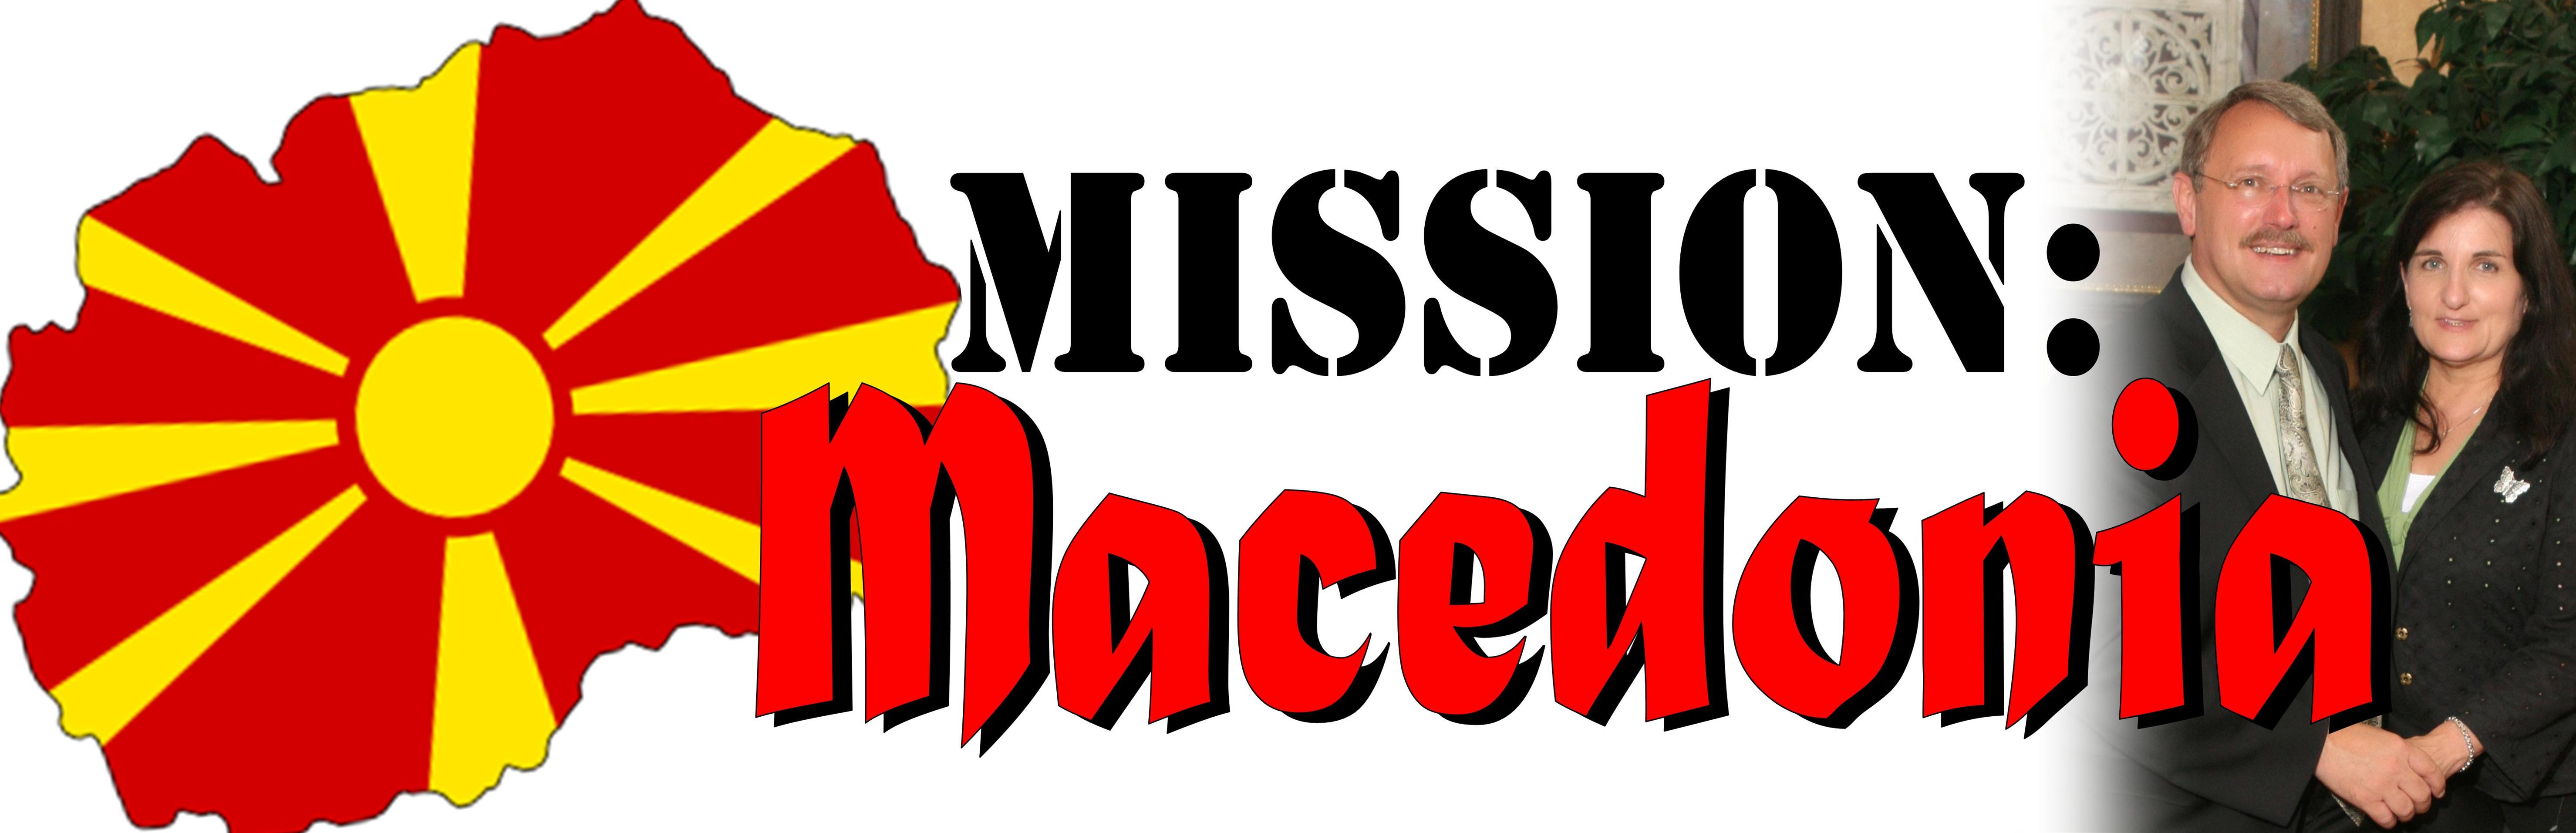 Mission Macedonia